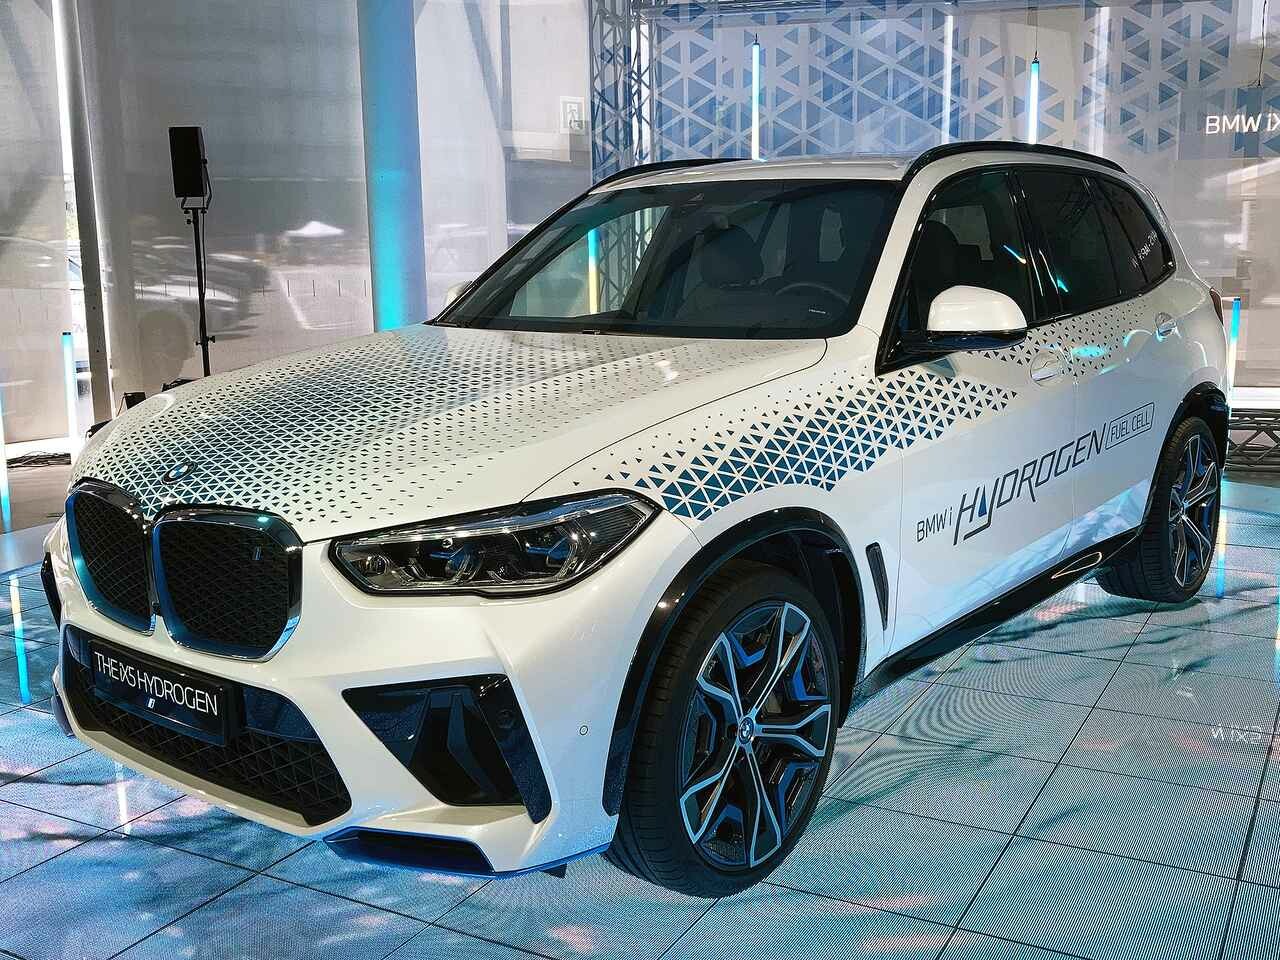 BMW ジャパンが燃料電池実験車両「iX5 ハイドロジェン」を公開。日本での公道走行による実証実験を開始